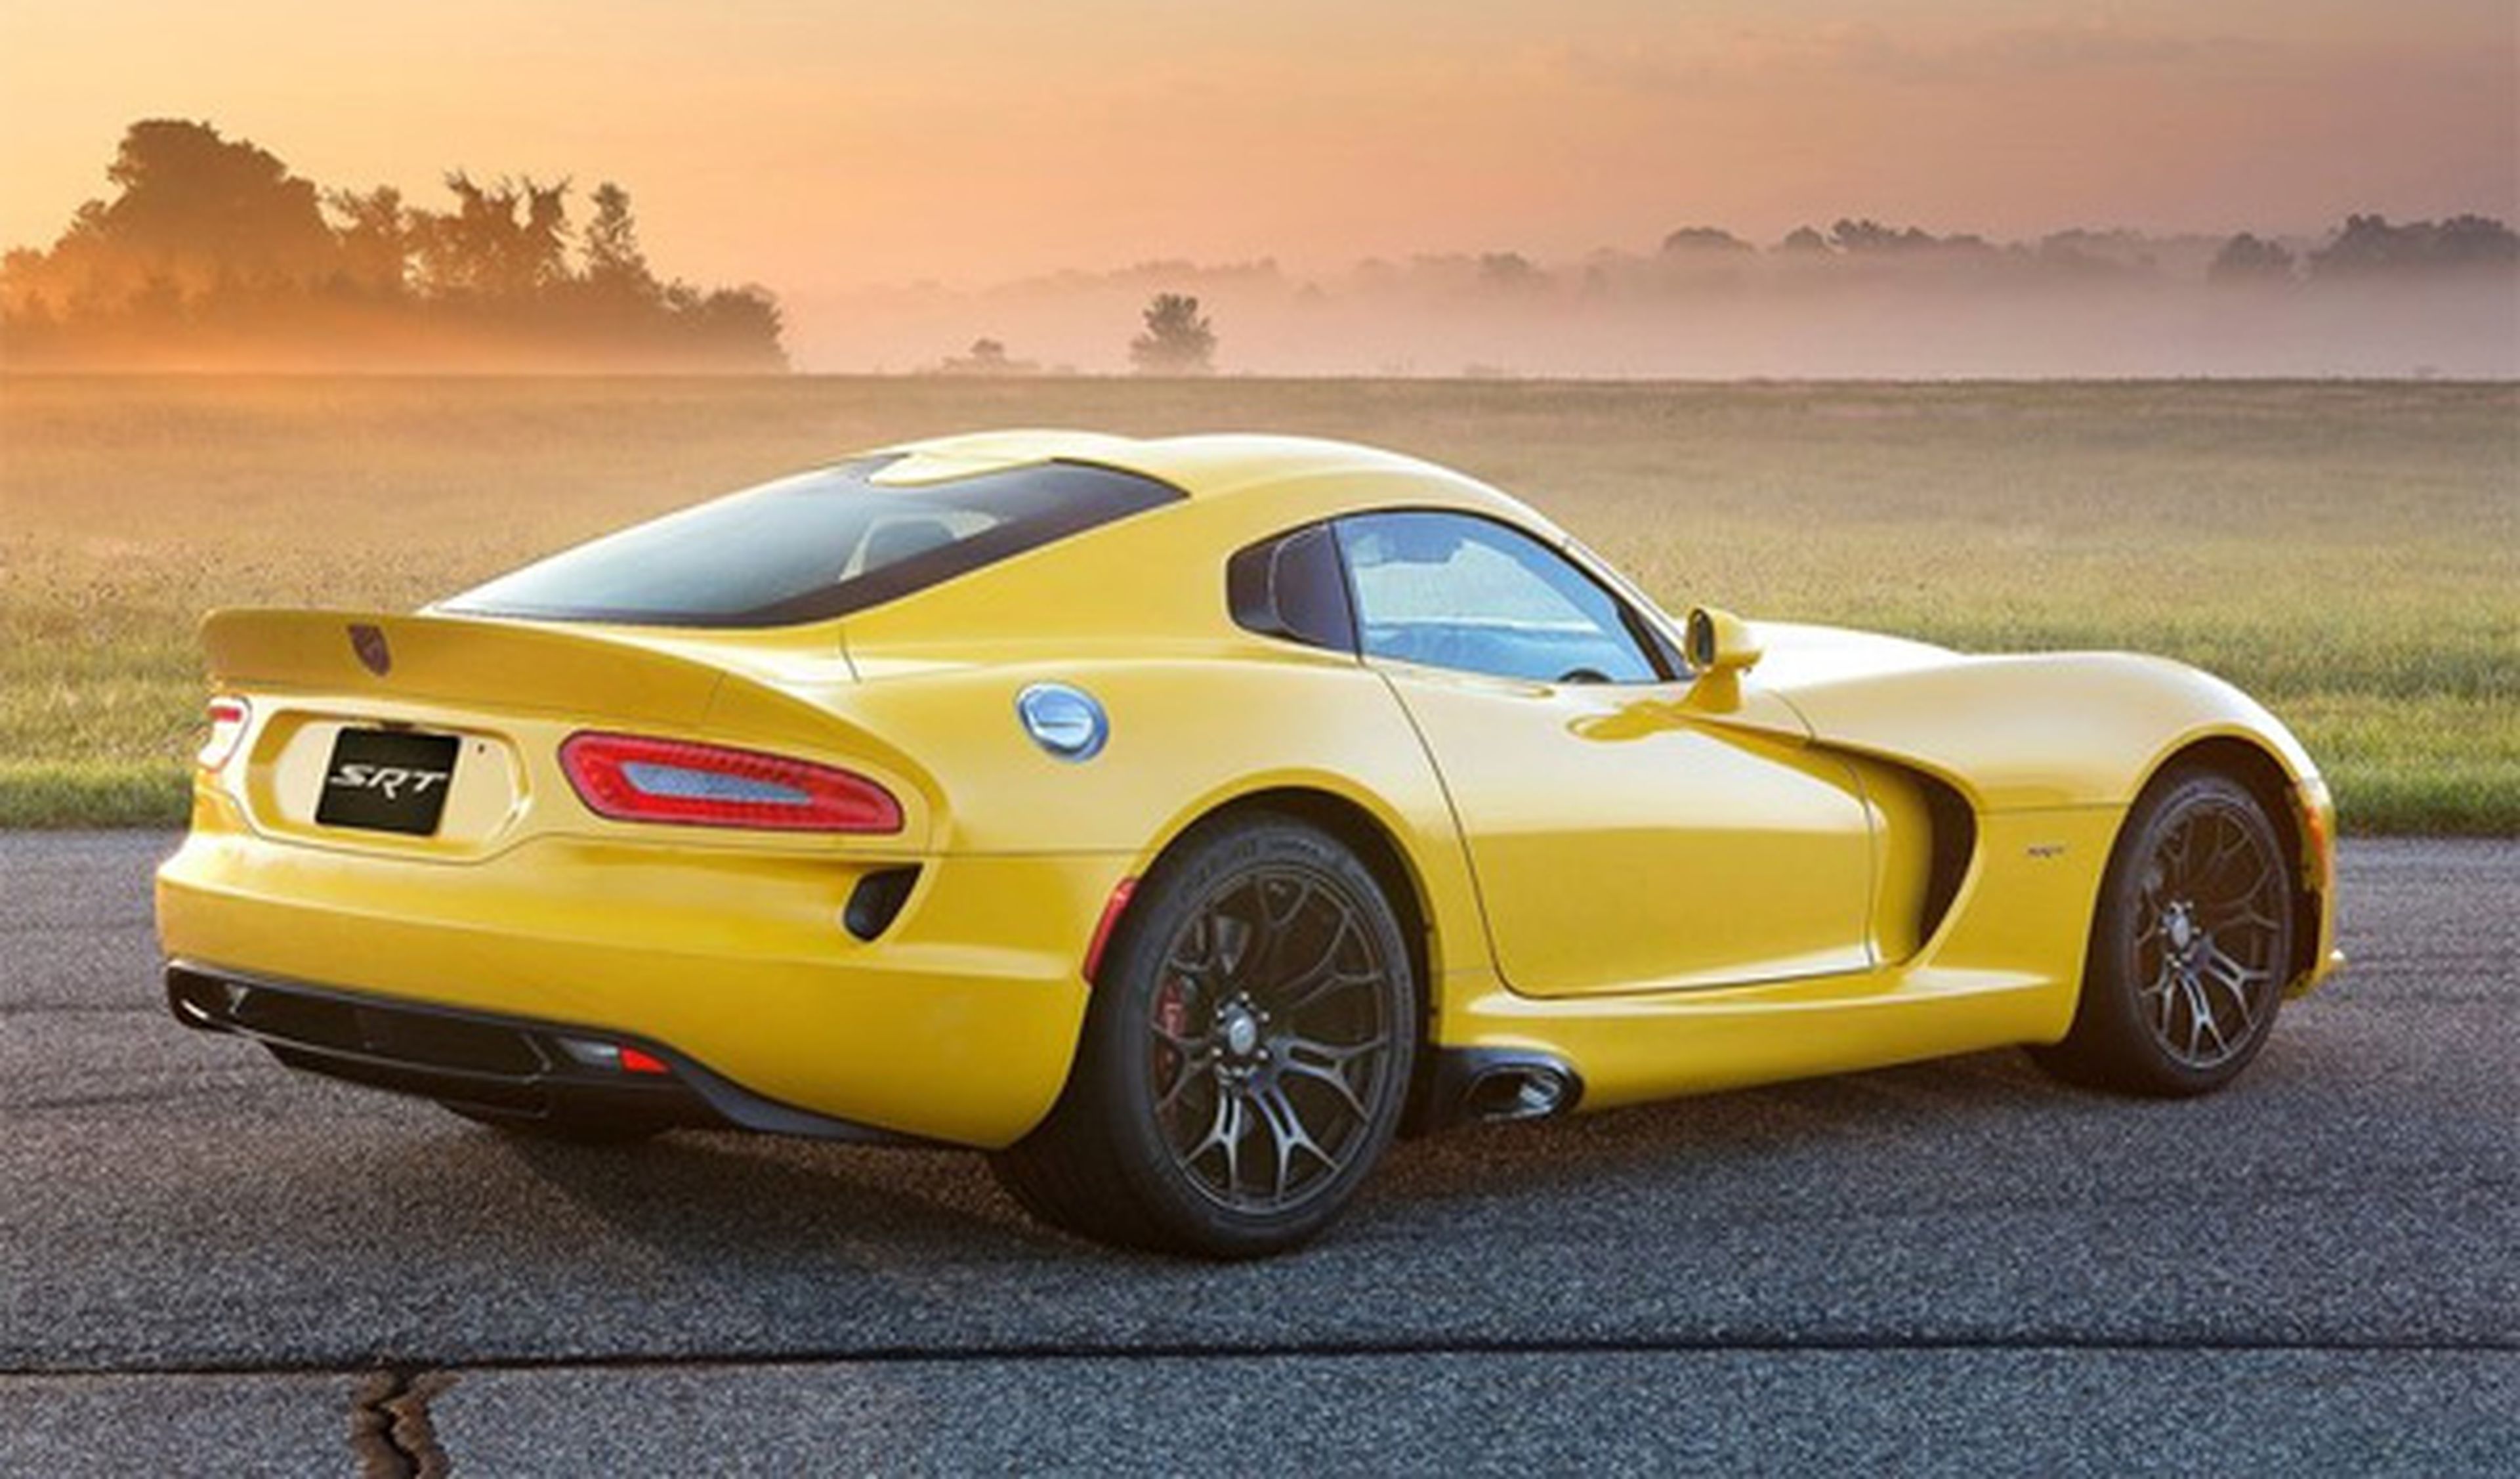 El Viper SRT 2013, el más caro de la historia de Chrysler